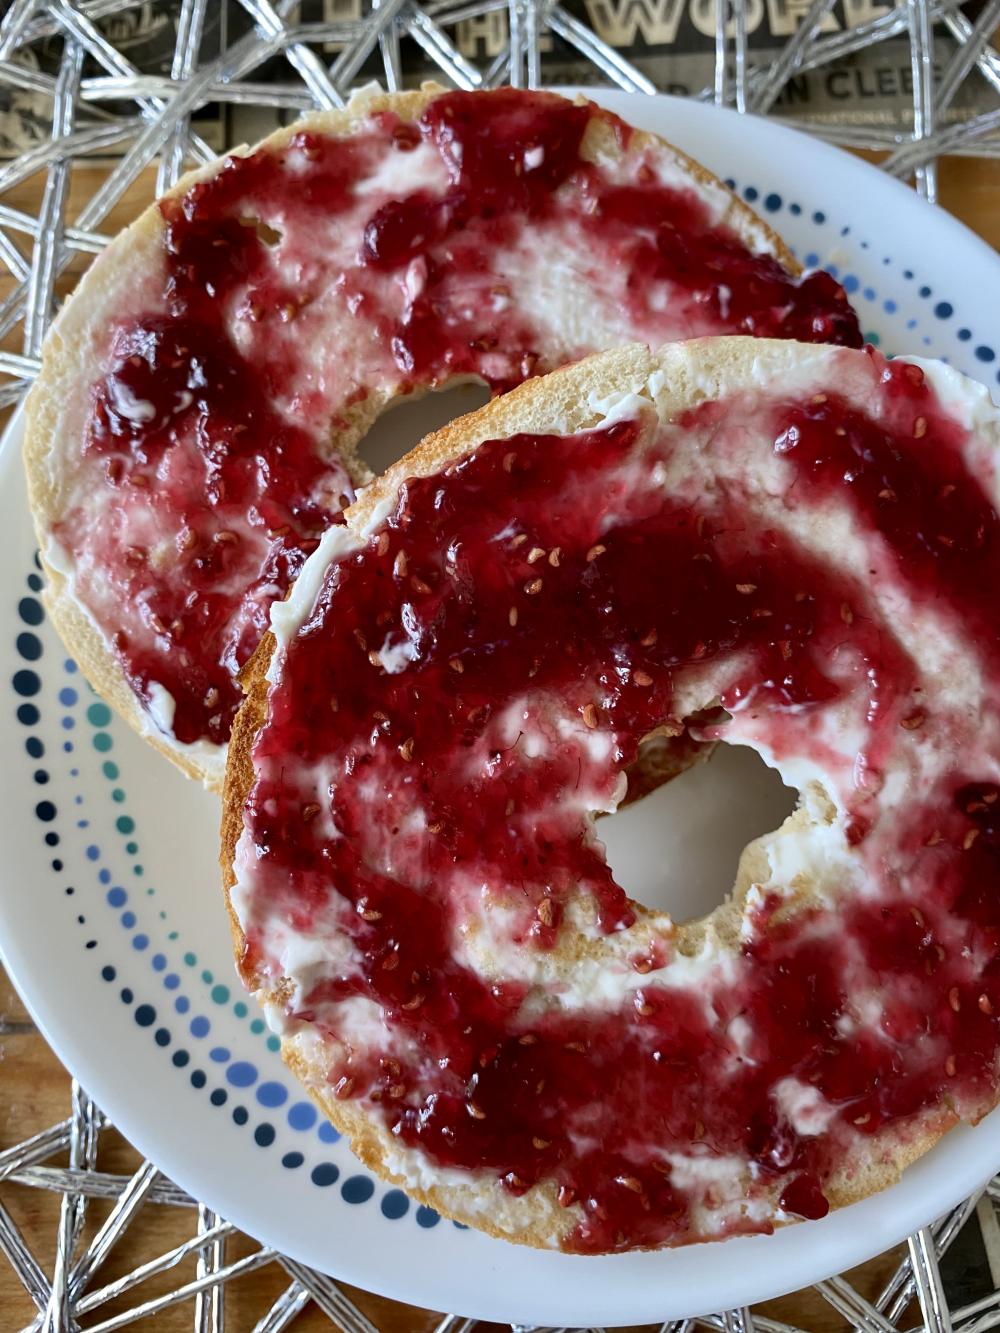 Bagel cream cheese and raspberry jam